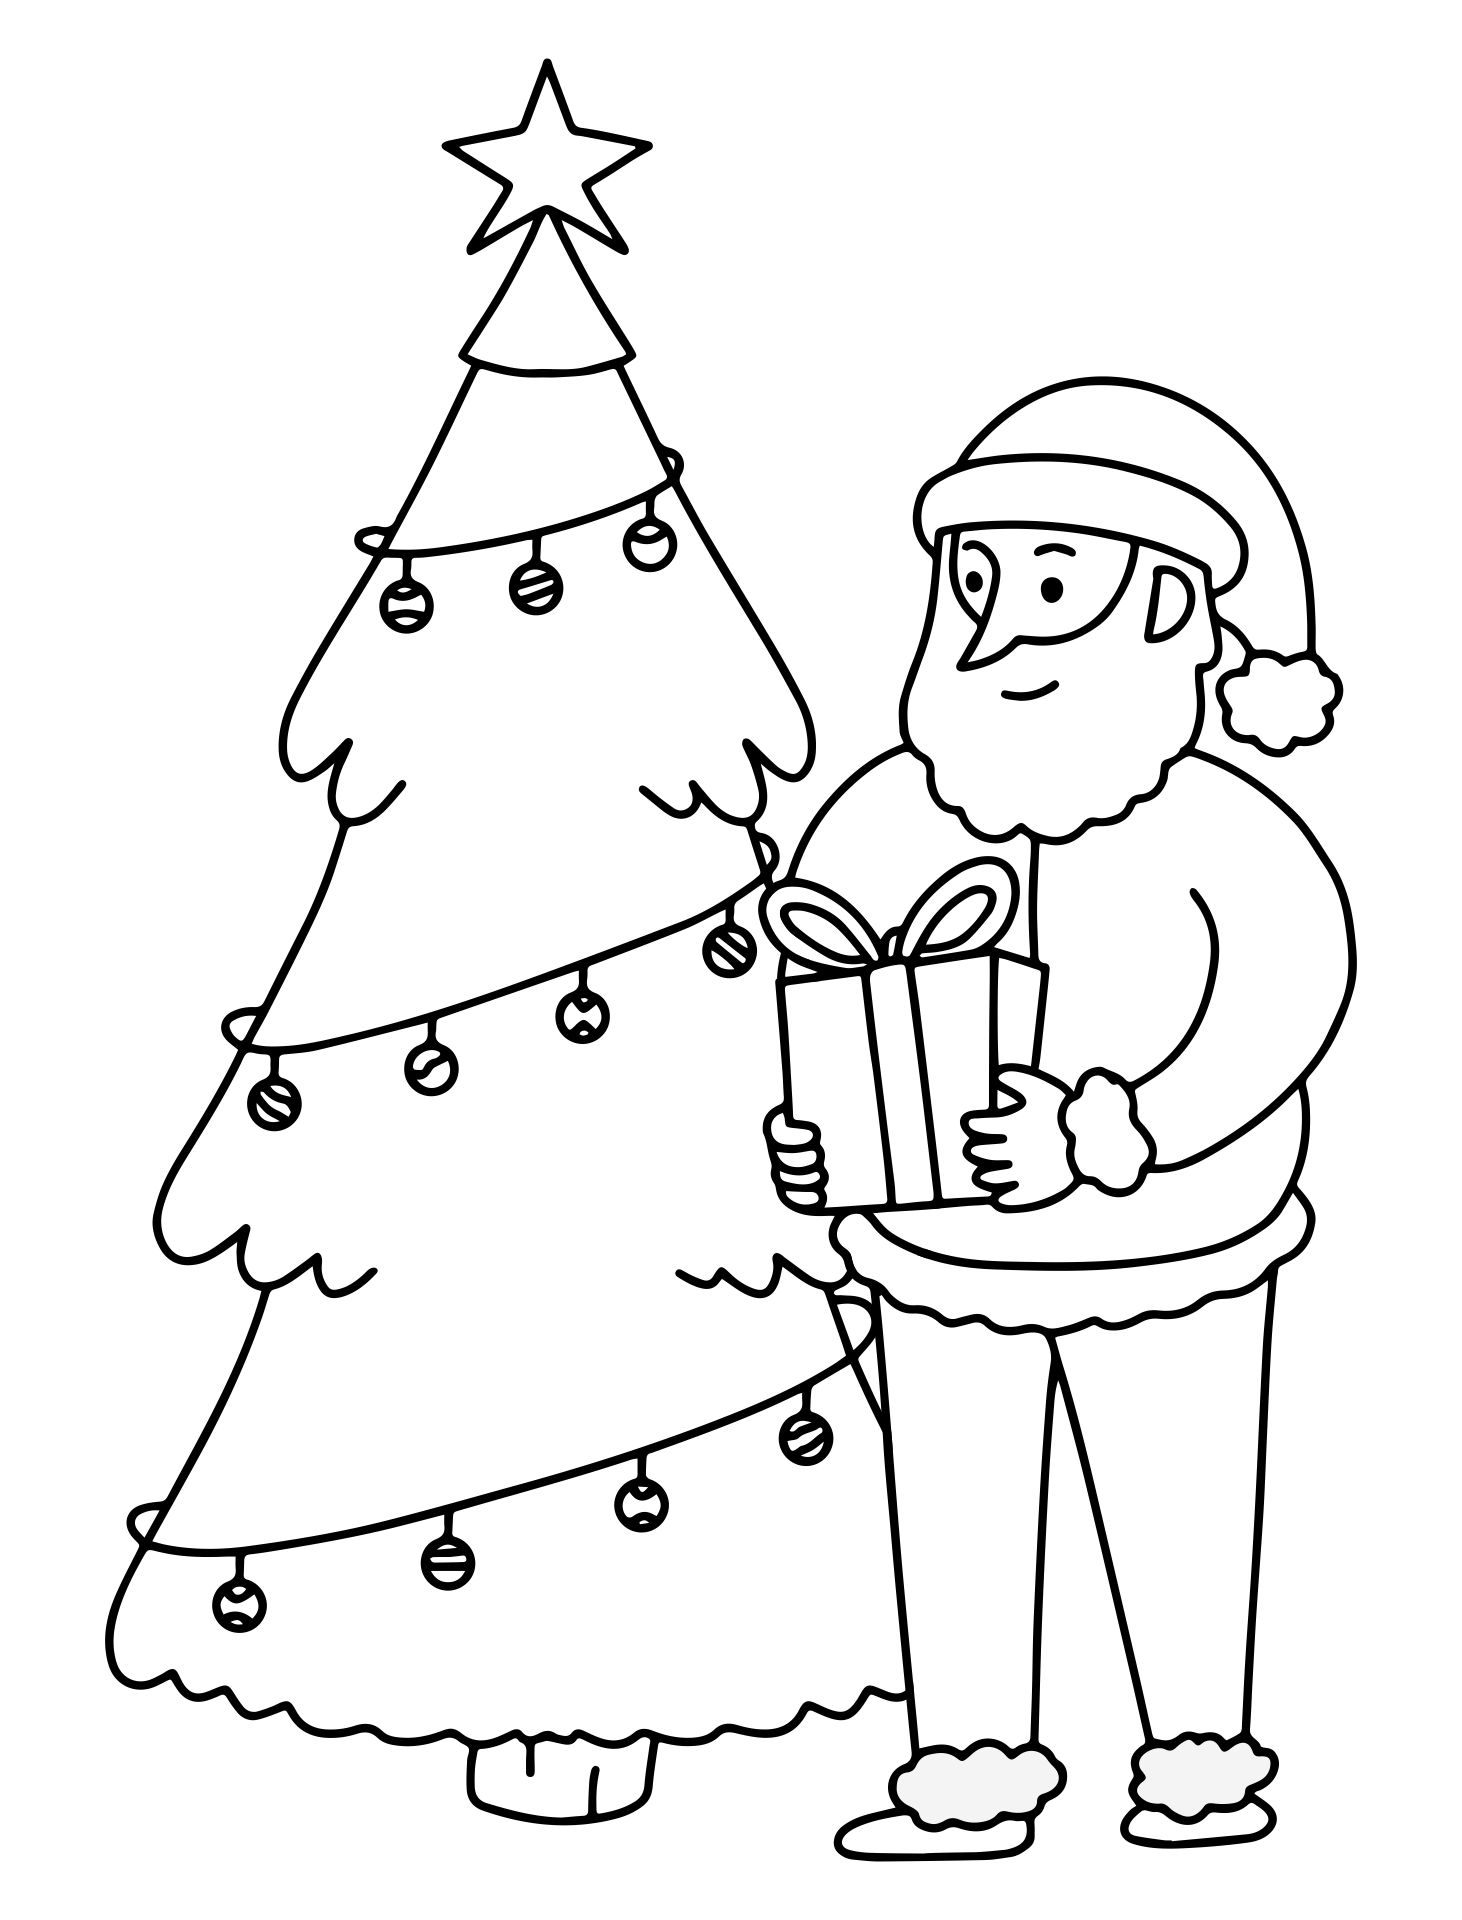 Christmas Tree With Santa Coloring Page